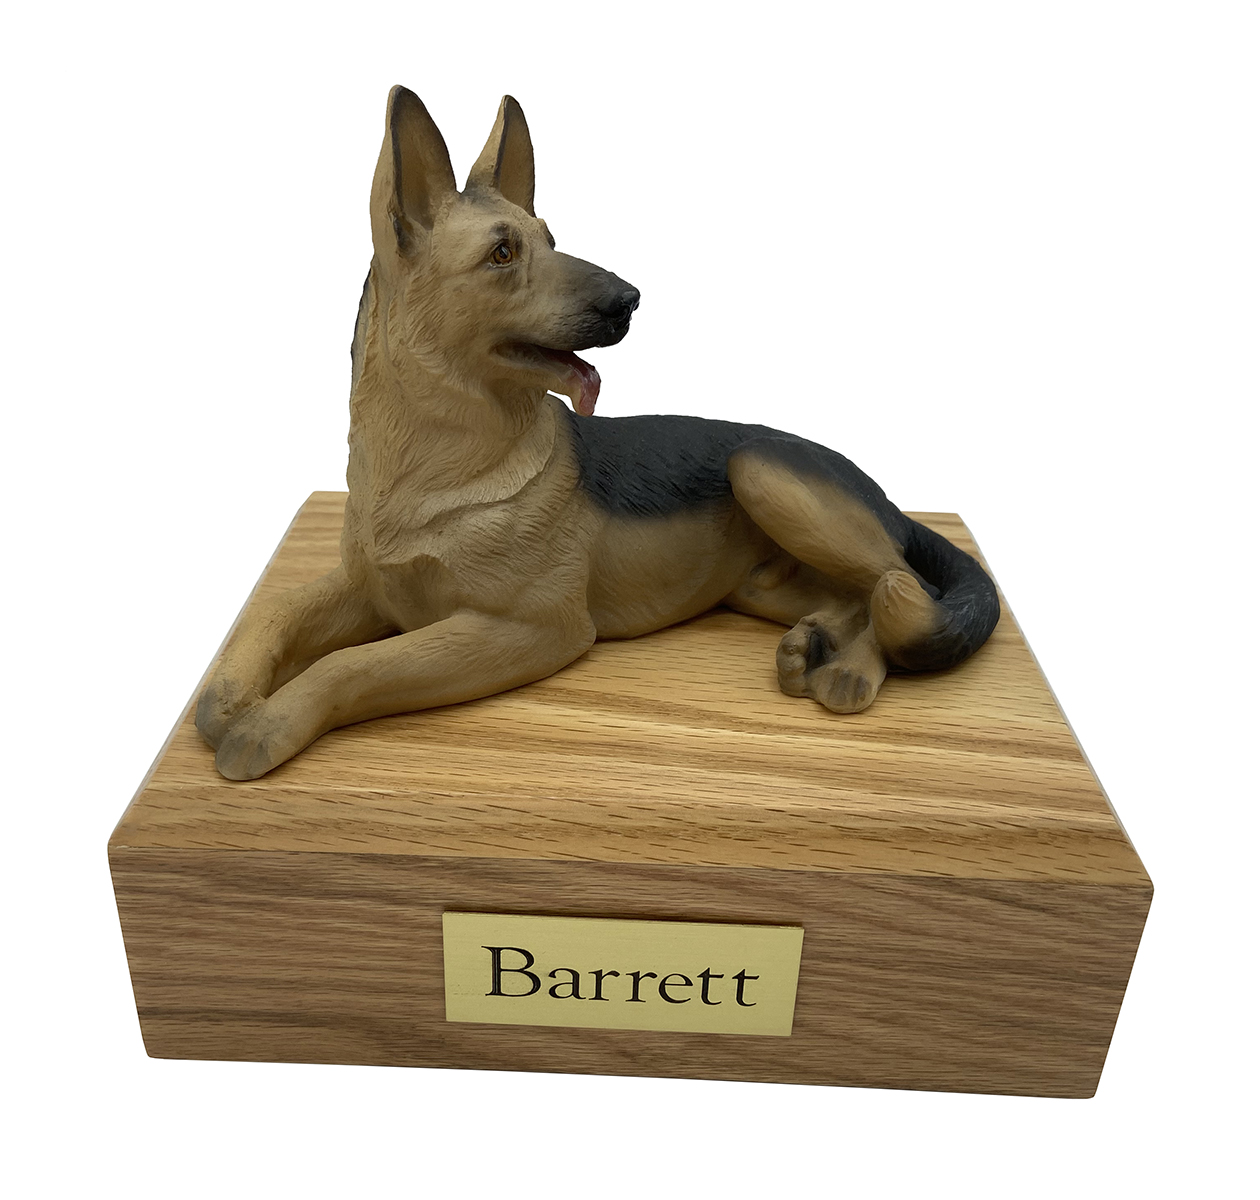 Dog, German Shepherd, Black/Tan - Figurine Urn